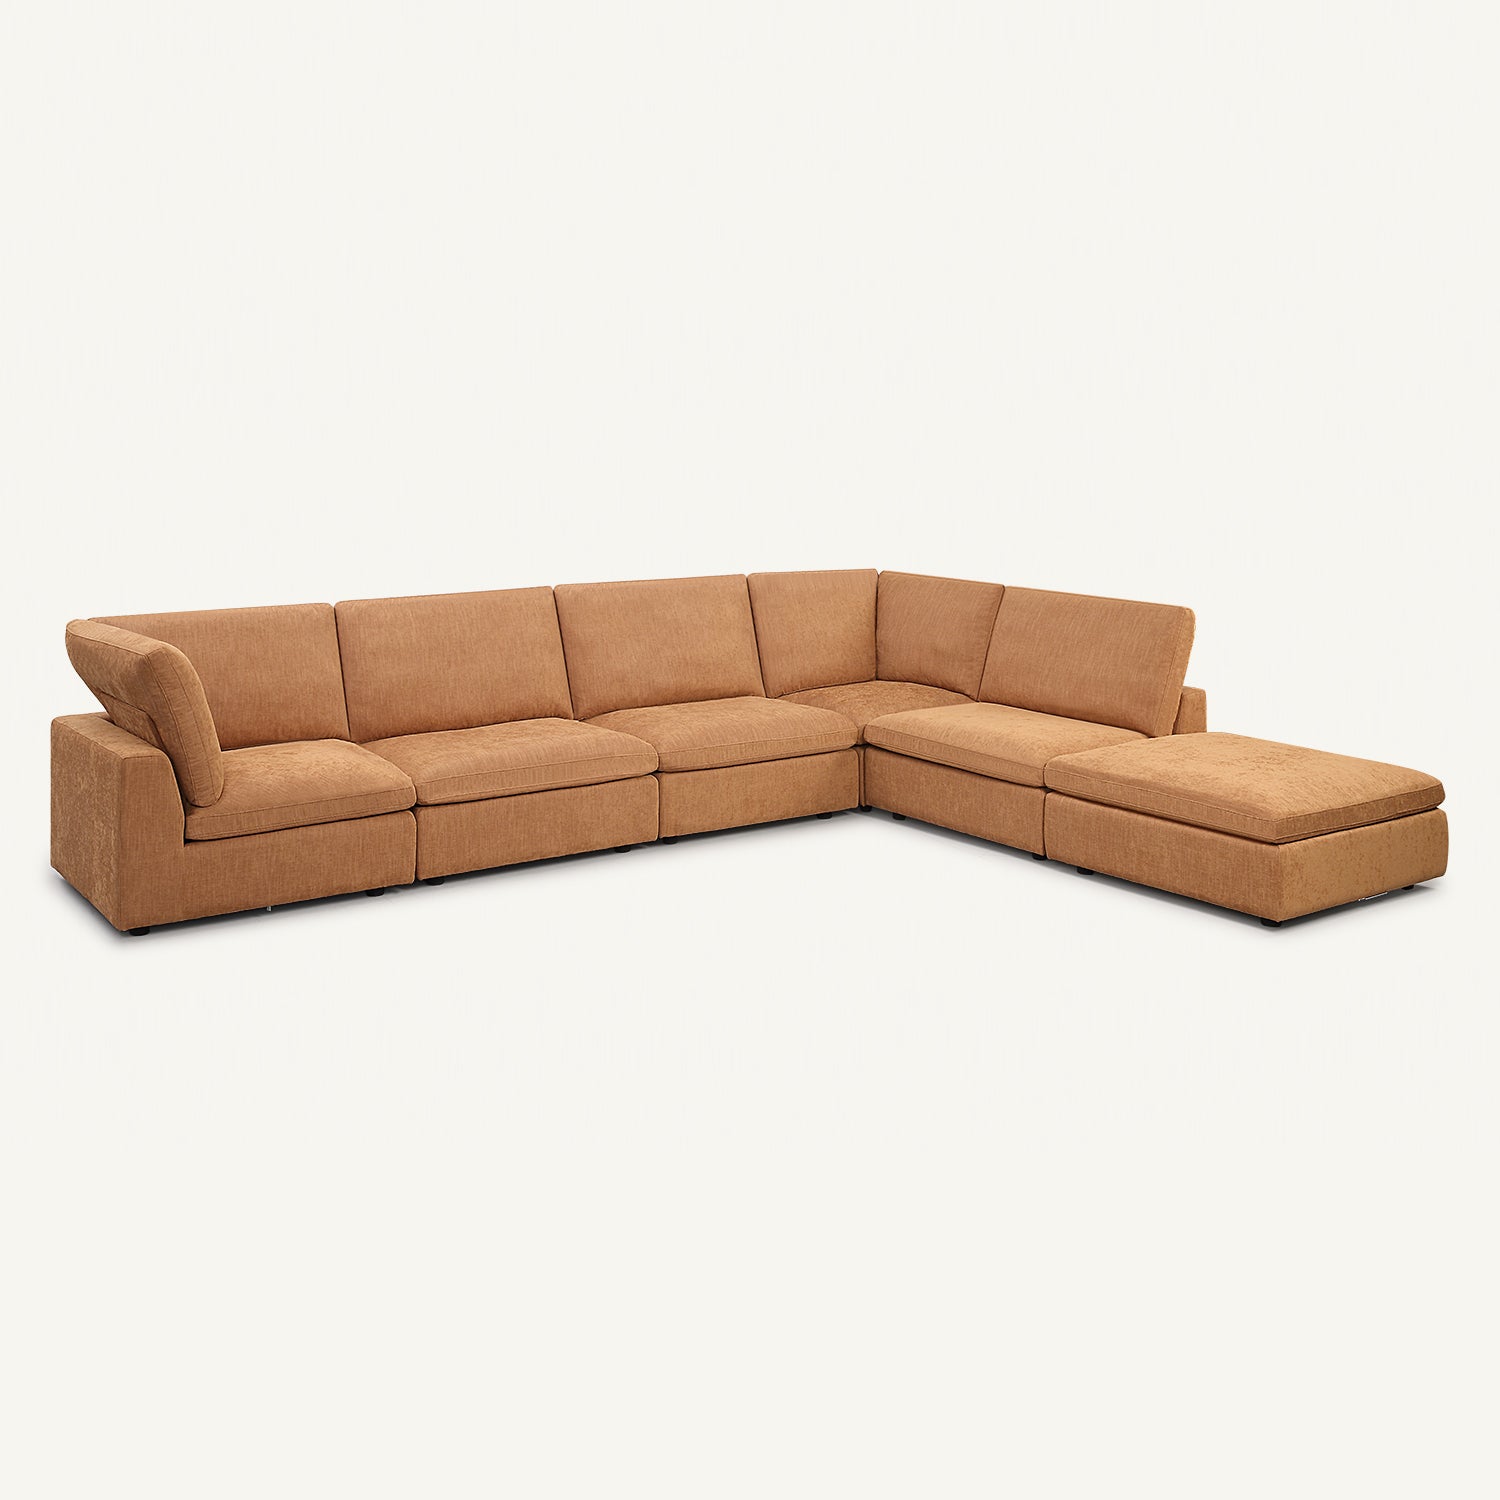 Cloud Tan Linen 5-Seat Sofa with Ottoman